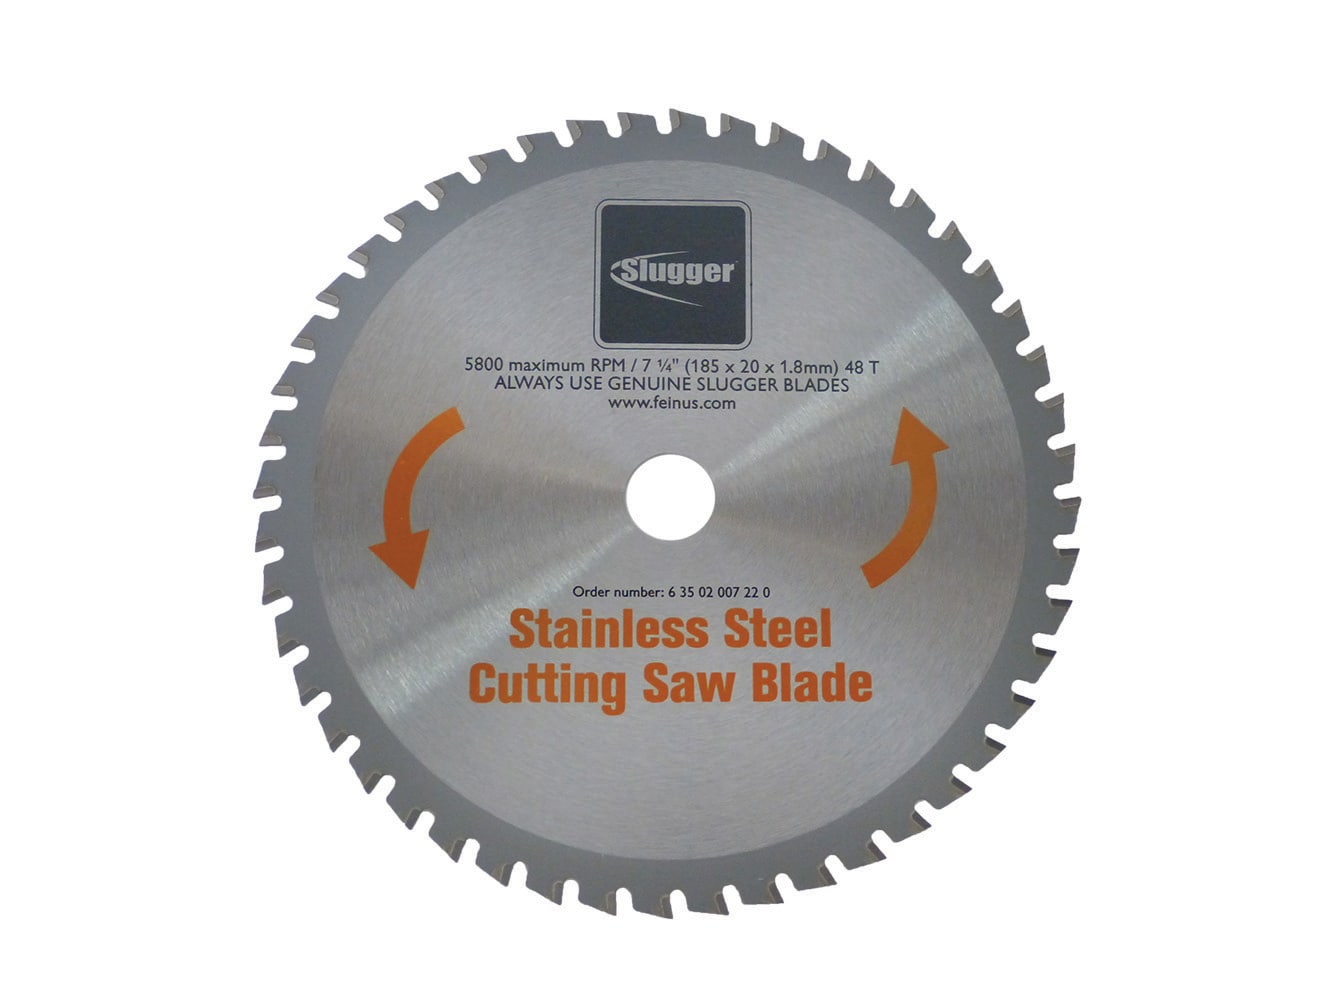 are circular saw blades high carbon steel?